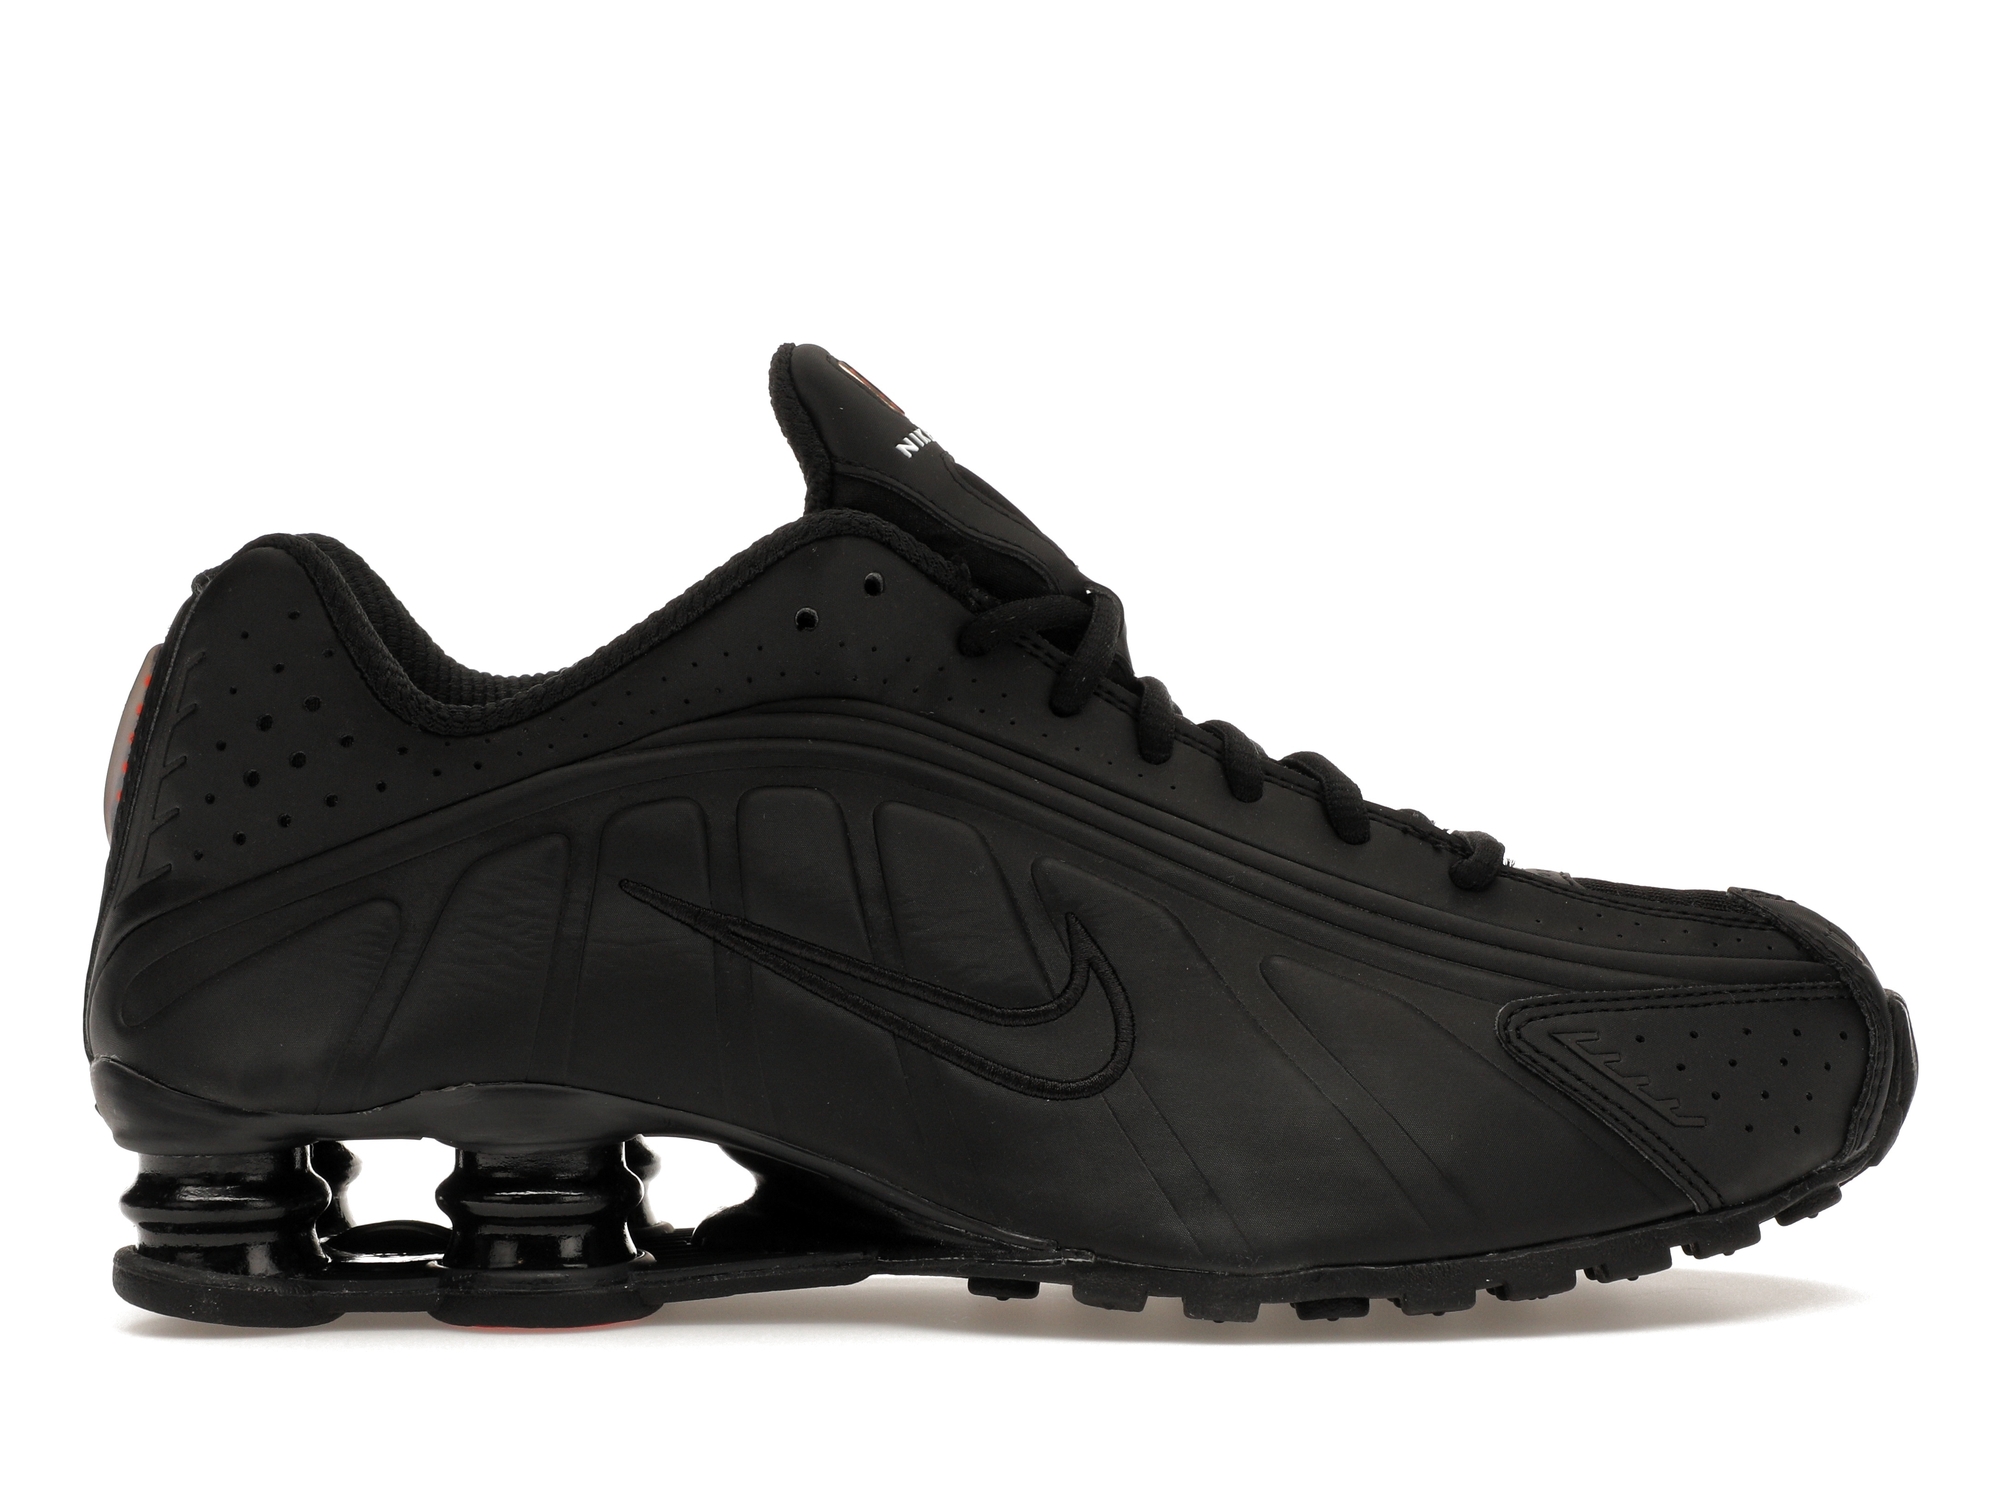 28cm Nike WMNS Shox R4 Black R3565-004ナイキウィメンズショックス - 靴